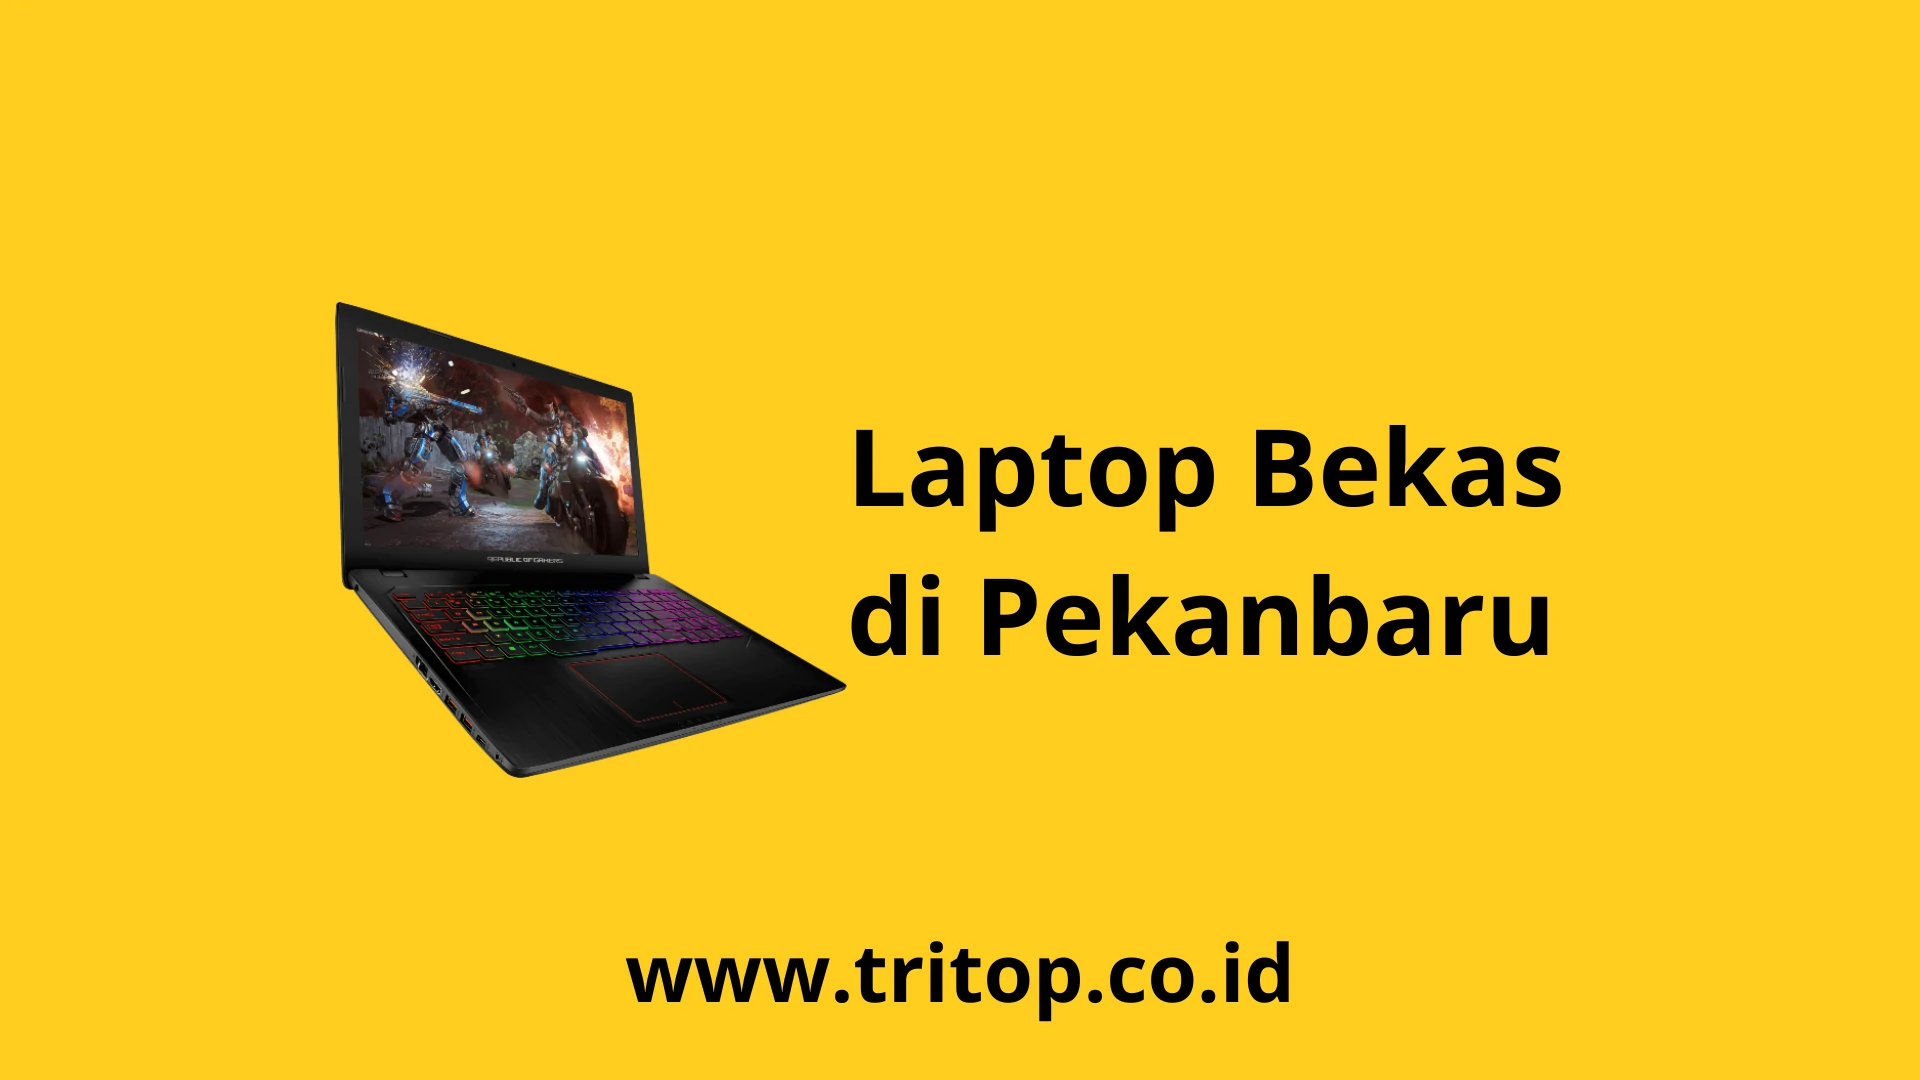 Laptop Bekas Pekanbaru Tritop.co.id